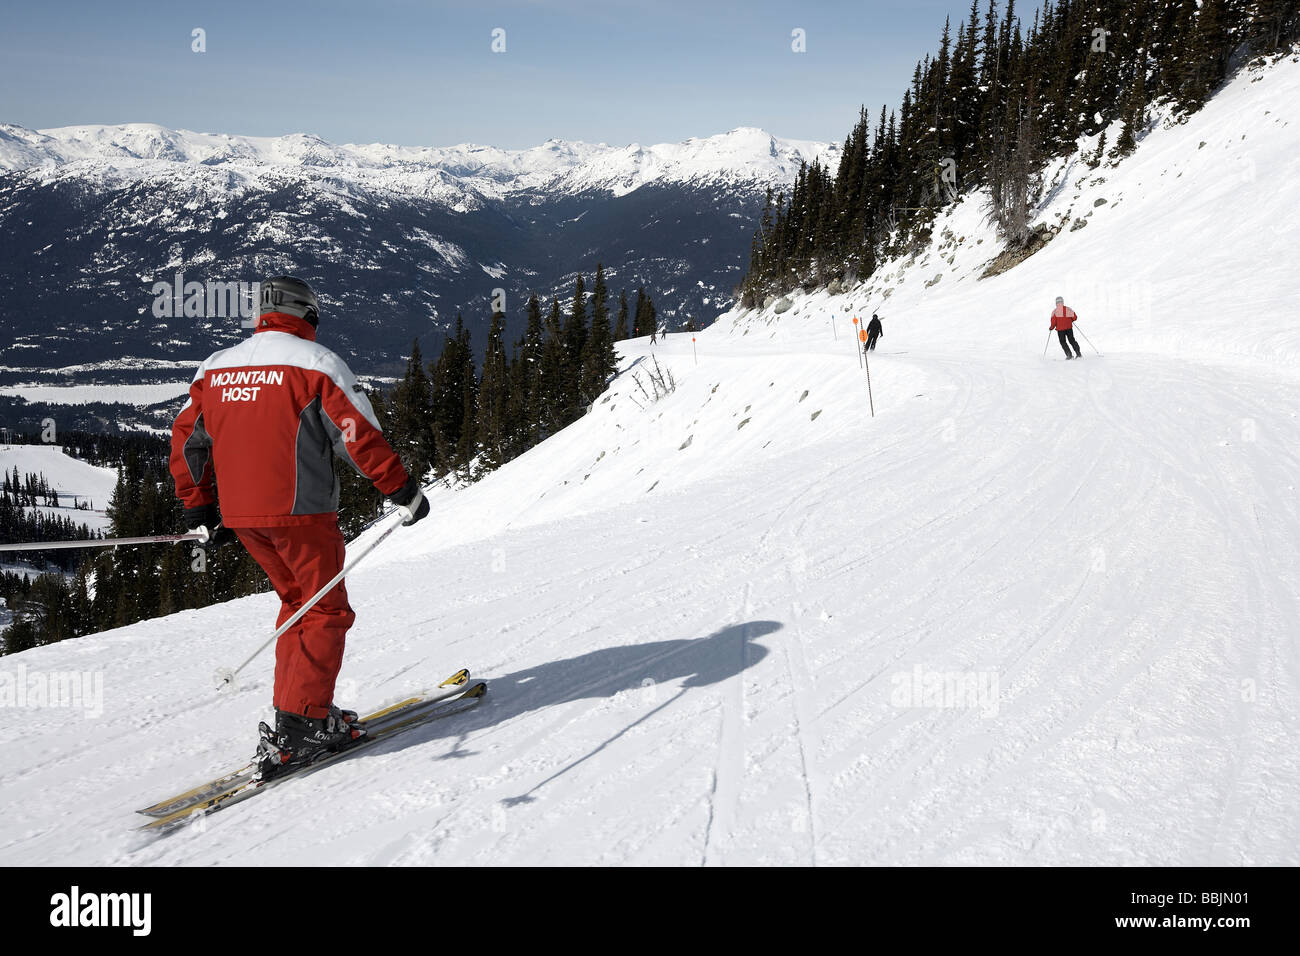 mountain-host-leading-a-skiing-group-on-blackcomb-mountain-whistler-BBJN01.jpg